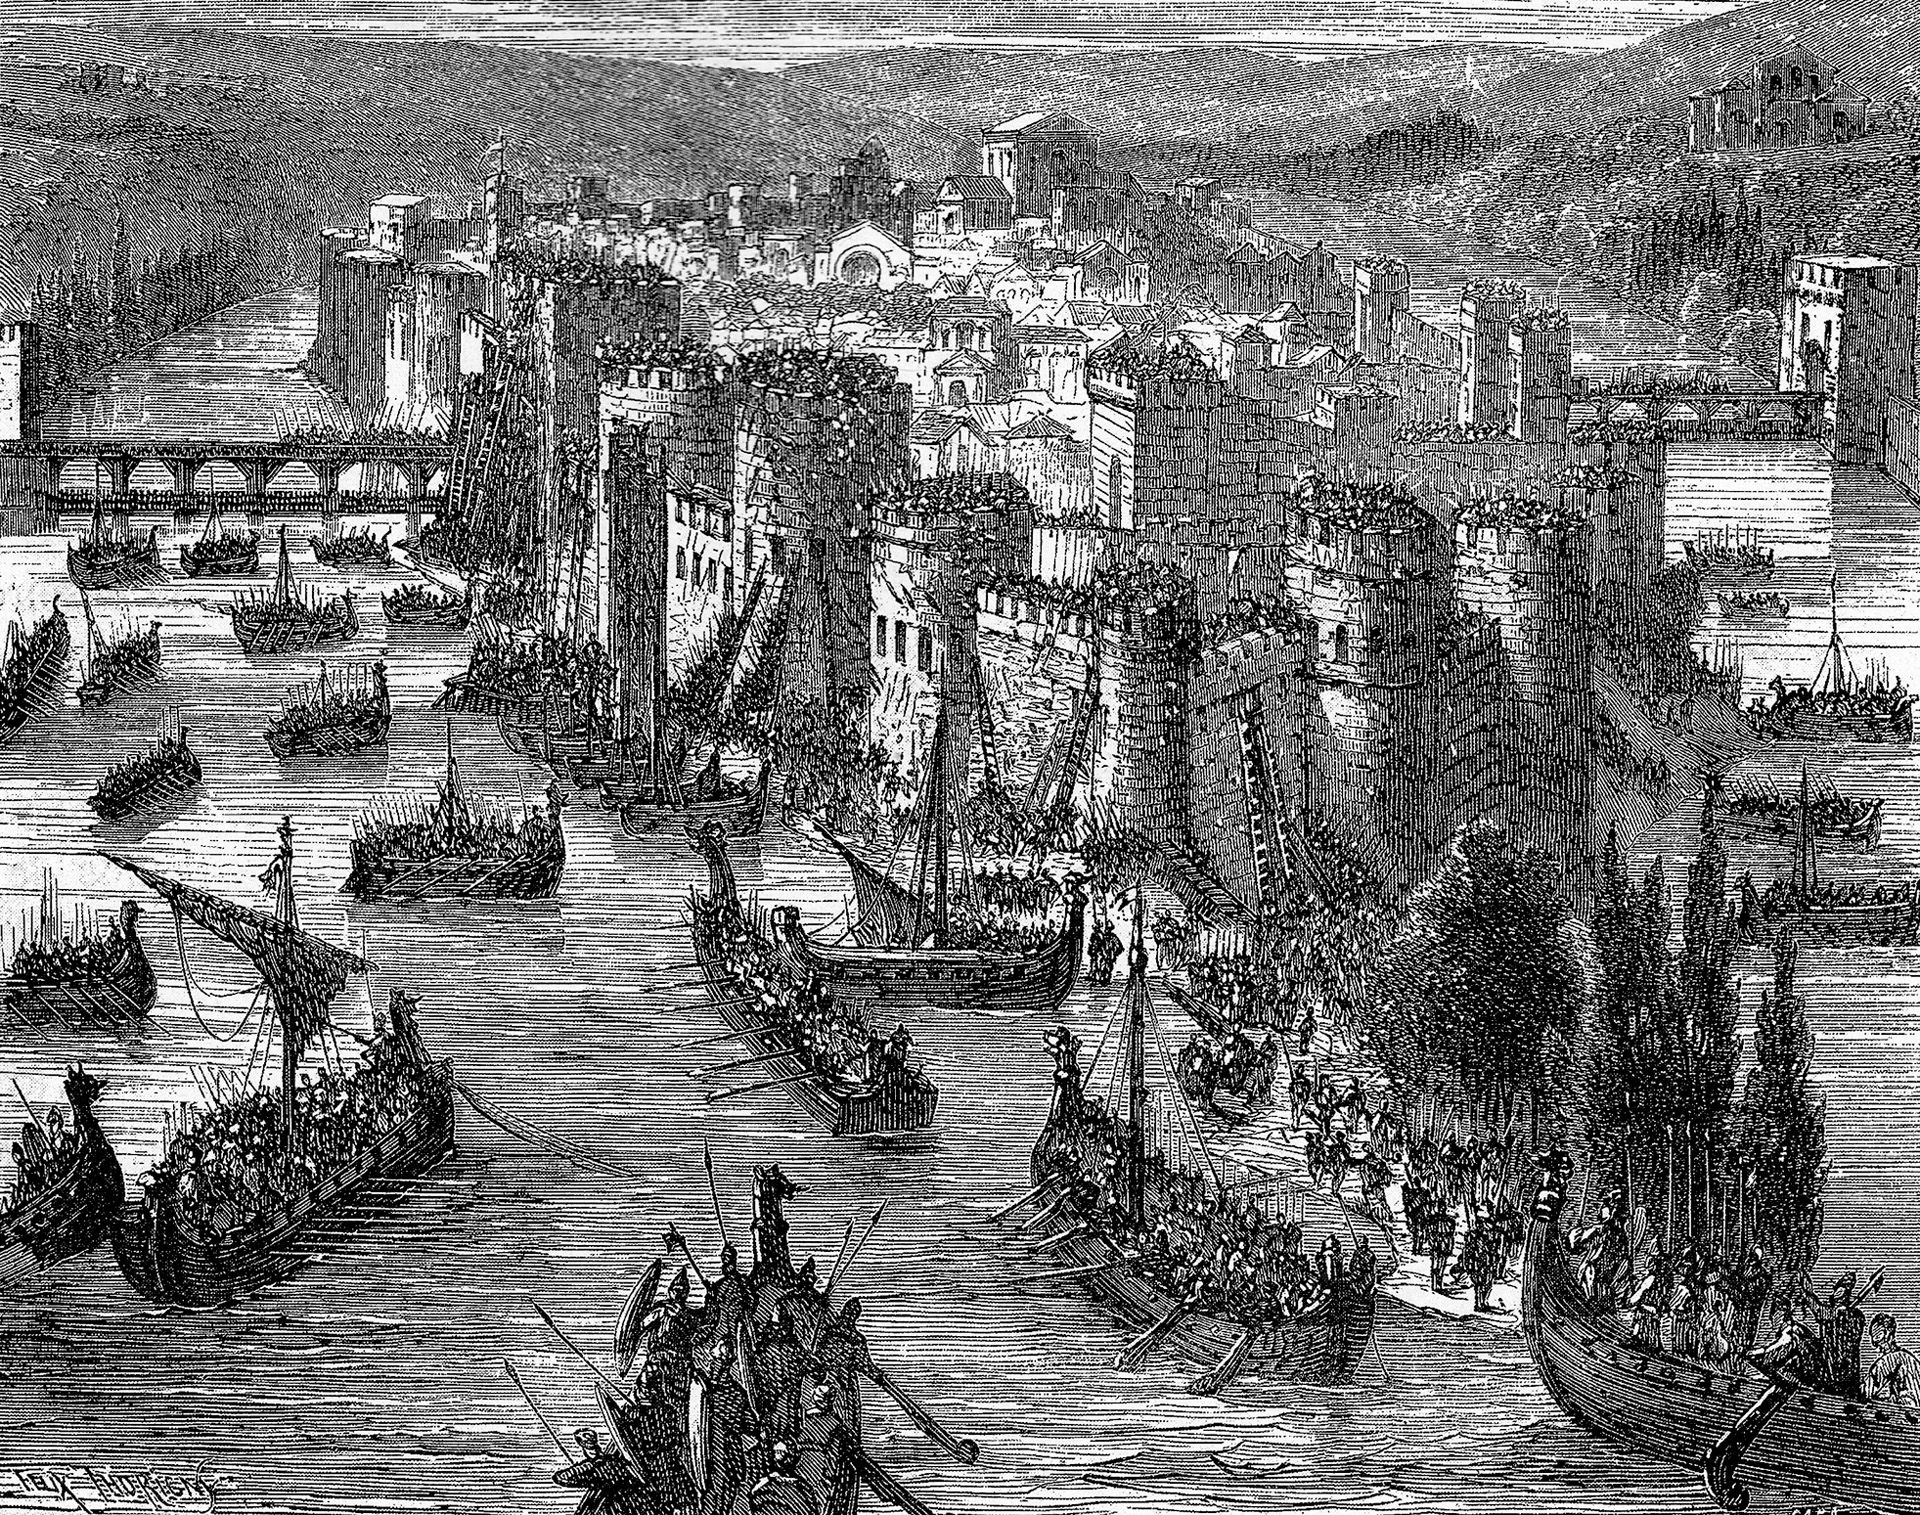 The Vikings assembled 200 ships and 8,000 men besiege the fortified Île de la Cité during the siege of Paris in 885.